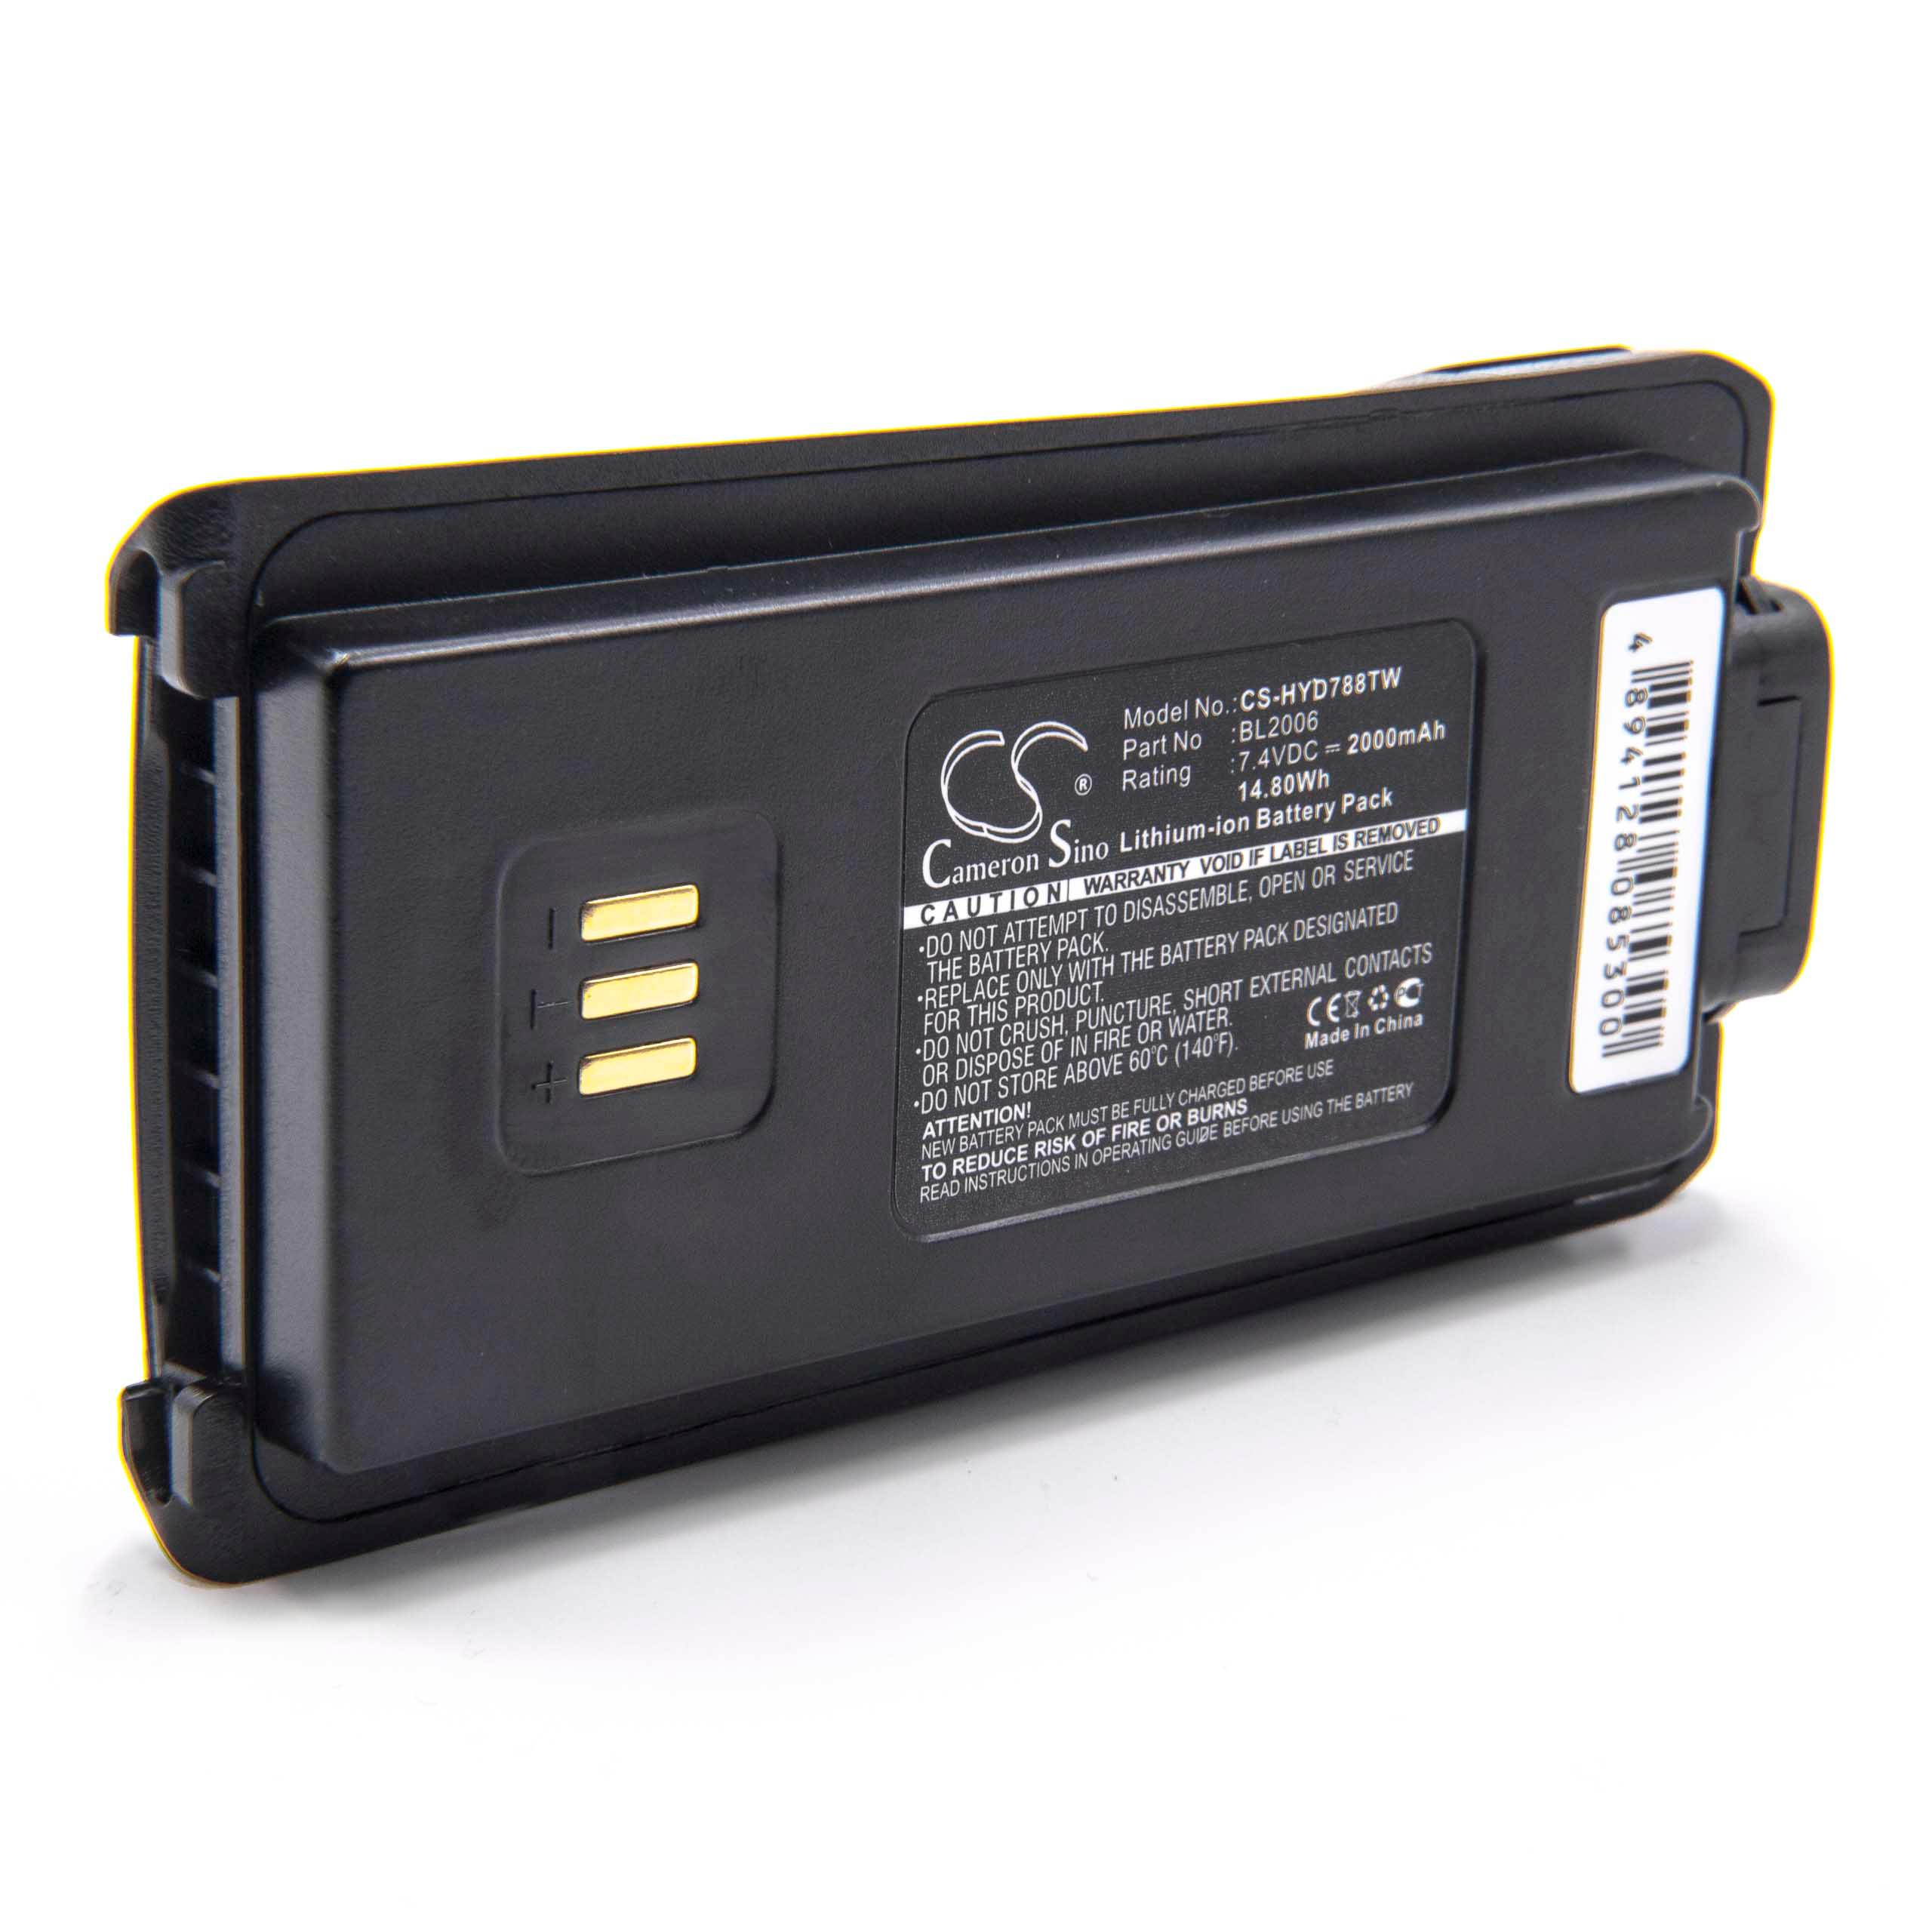 Batterie remplace Hyt BL2006Li, BL2008, BL2006, BL2503 pour radio talkie-walkie - 2000mAh 7,4V Li-ion